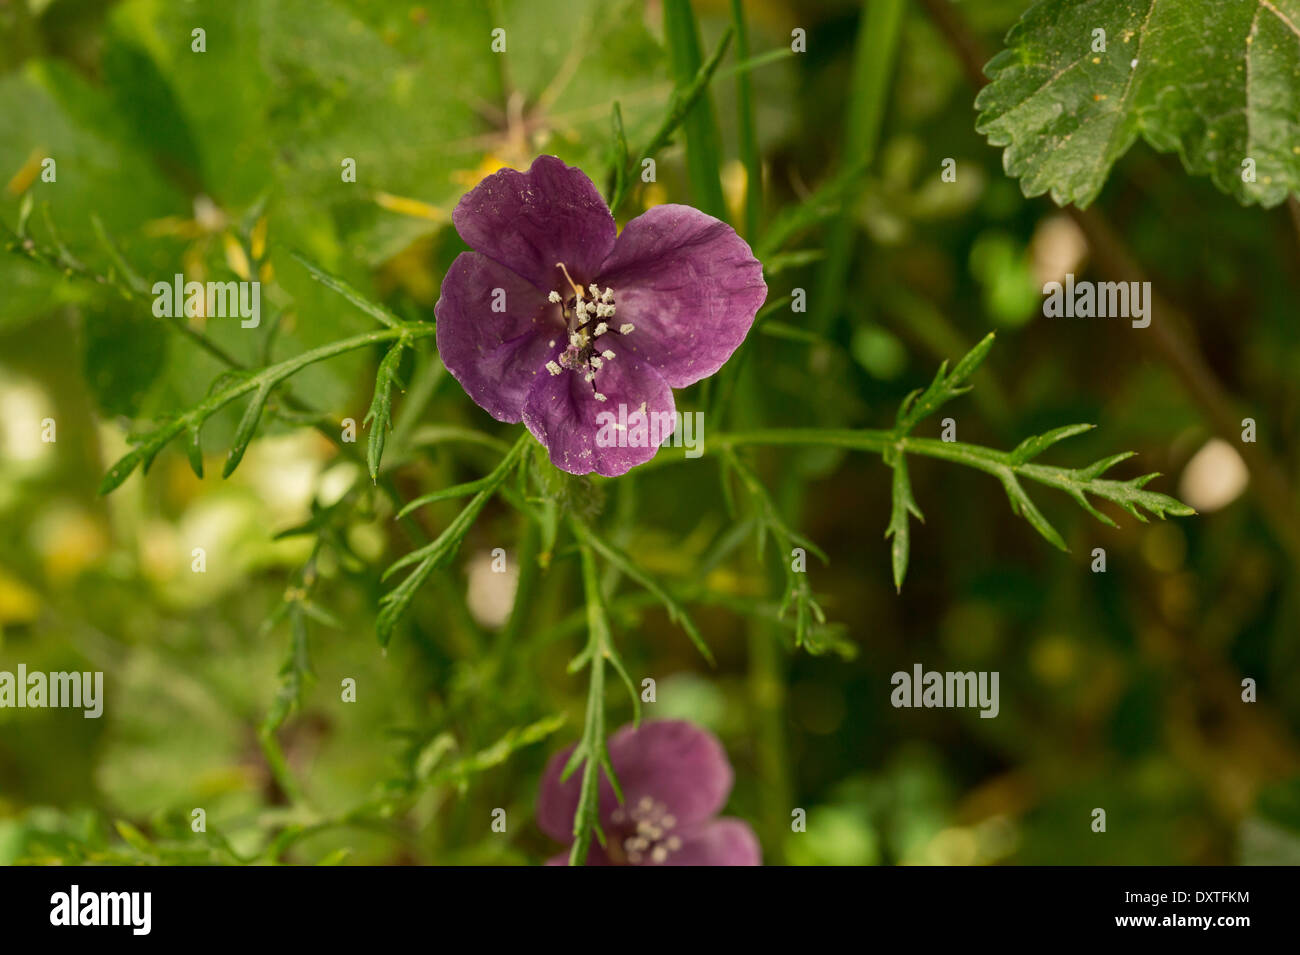 Violwt Horned Poppy, Roemeria hybrida in flower in disturbed ground, Cyprus Stock Photo